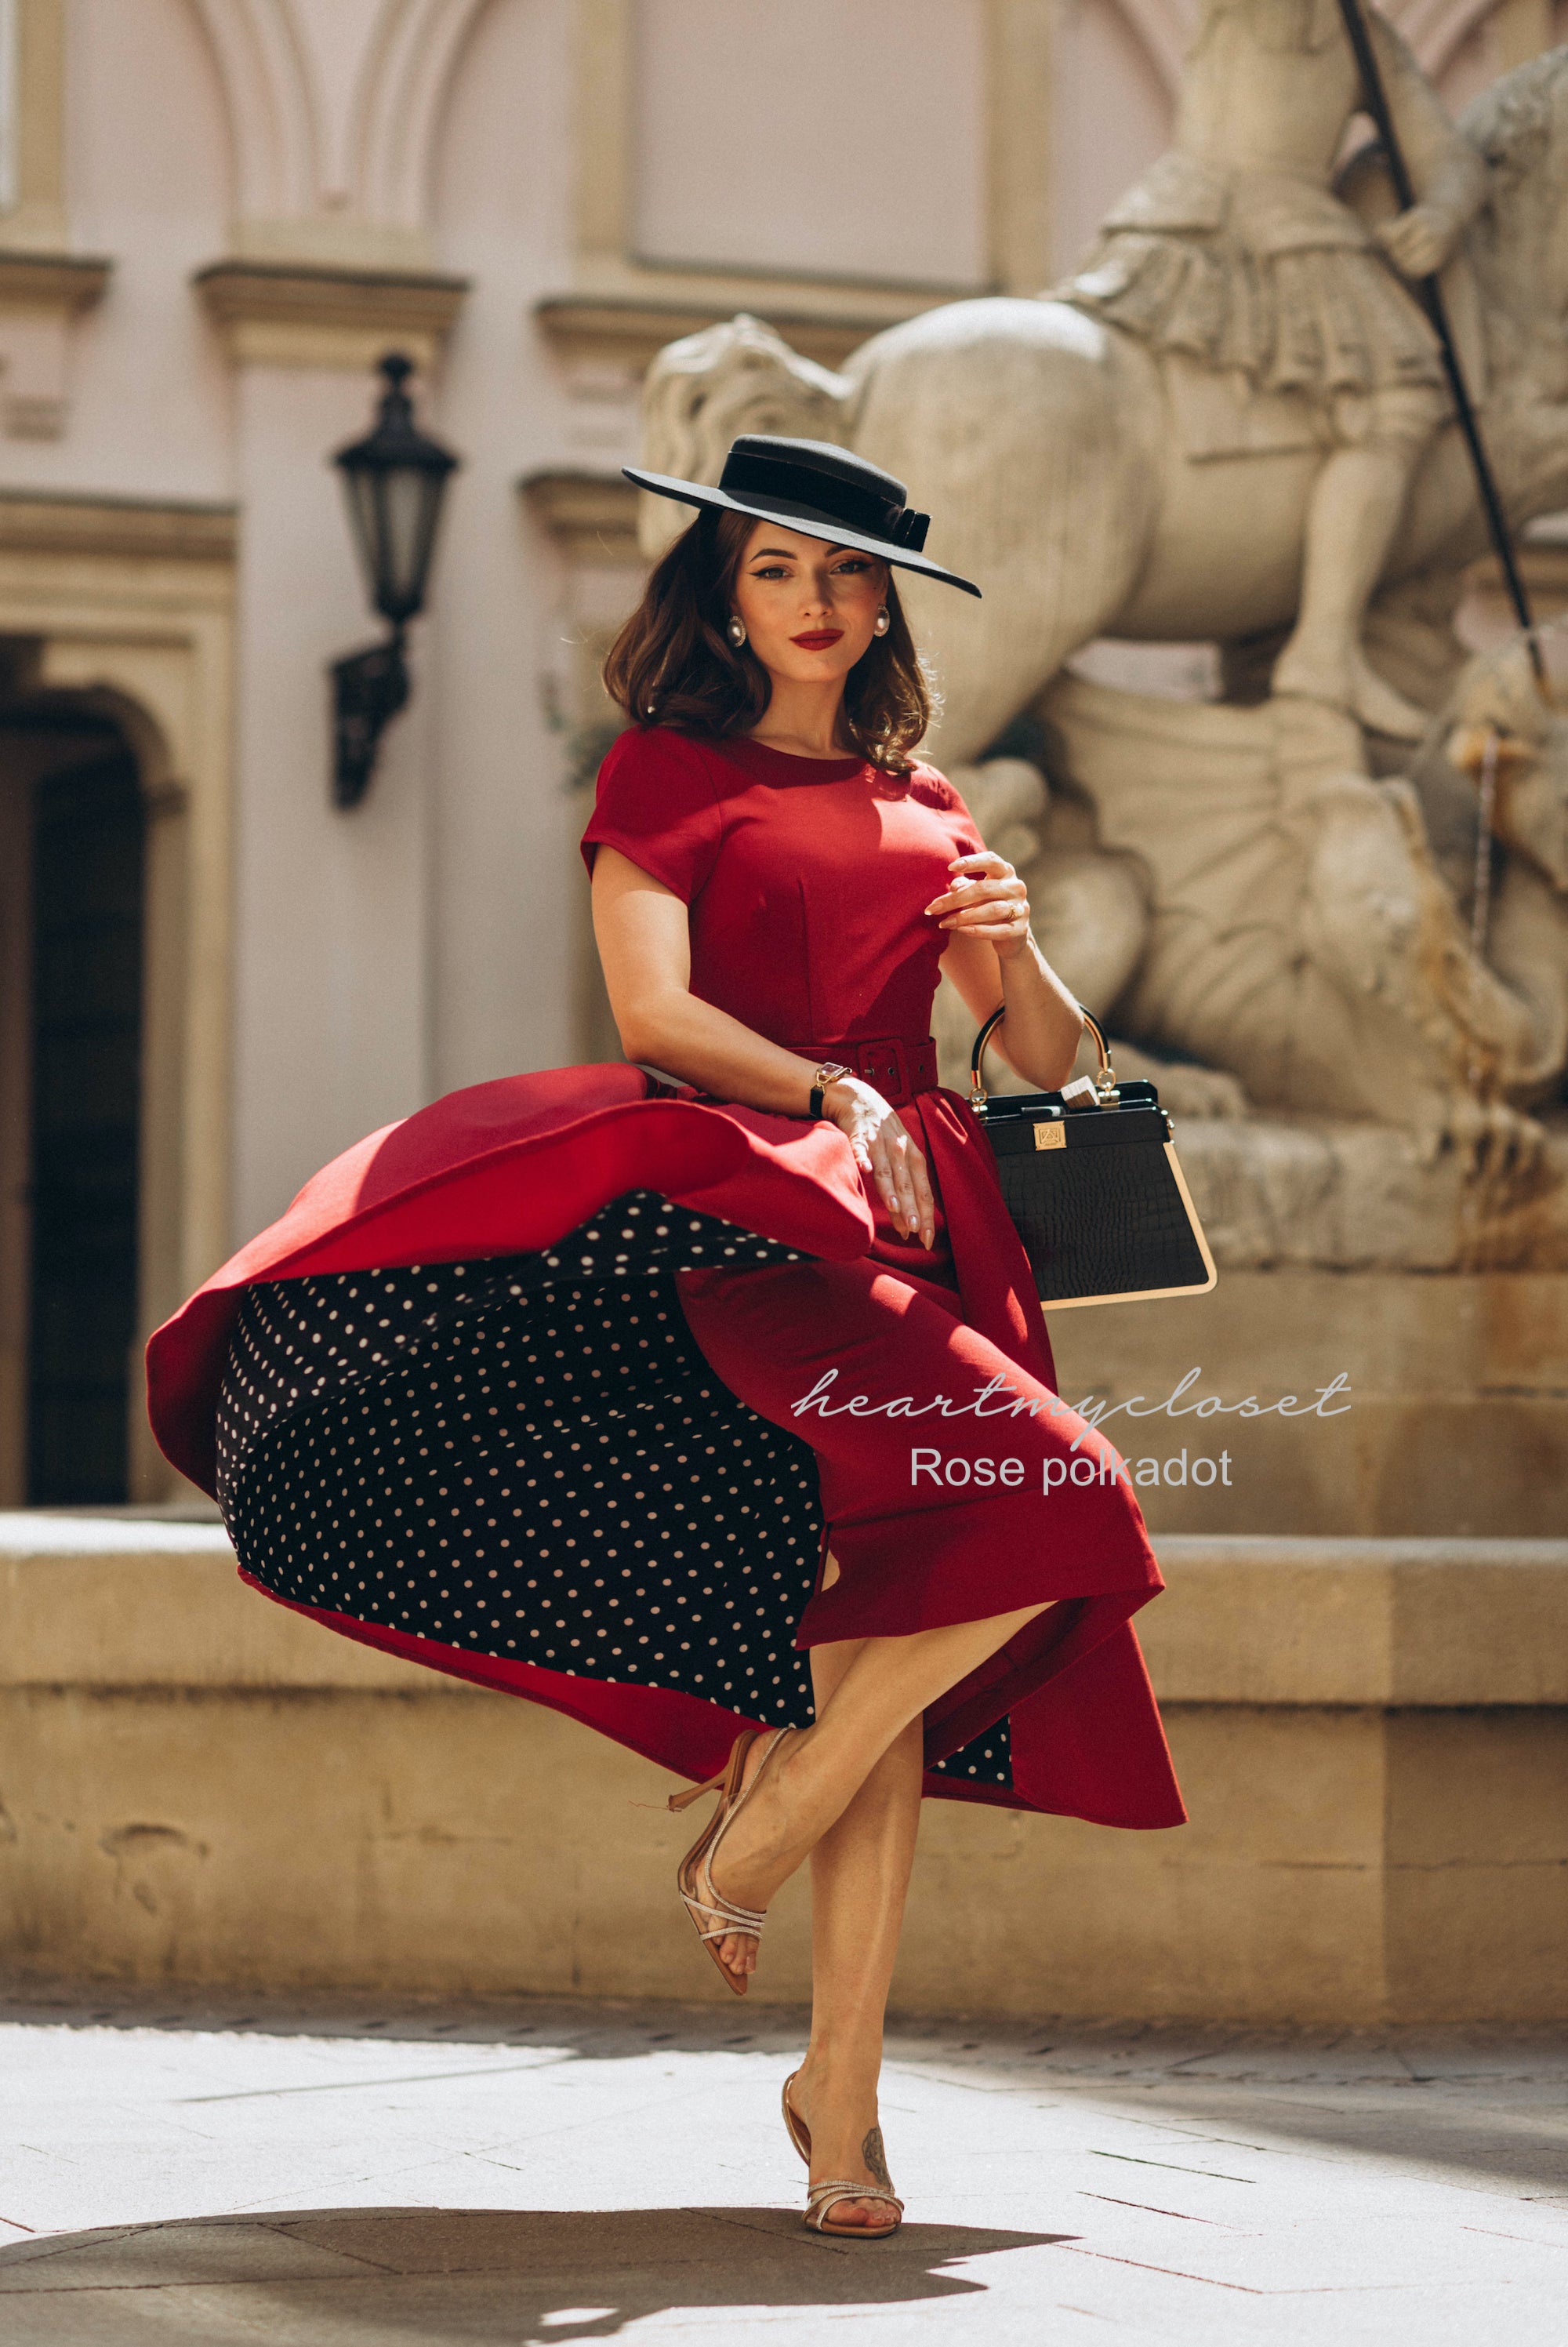 Pleated Red Dress | Holiday Outfit Idea - joyfully so